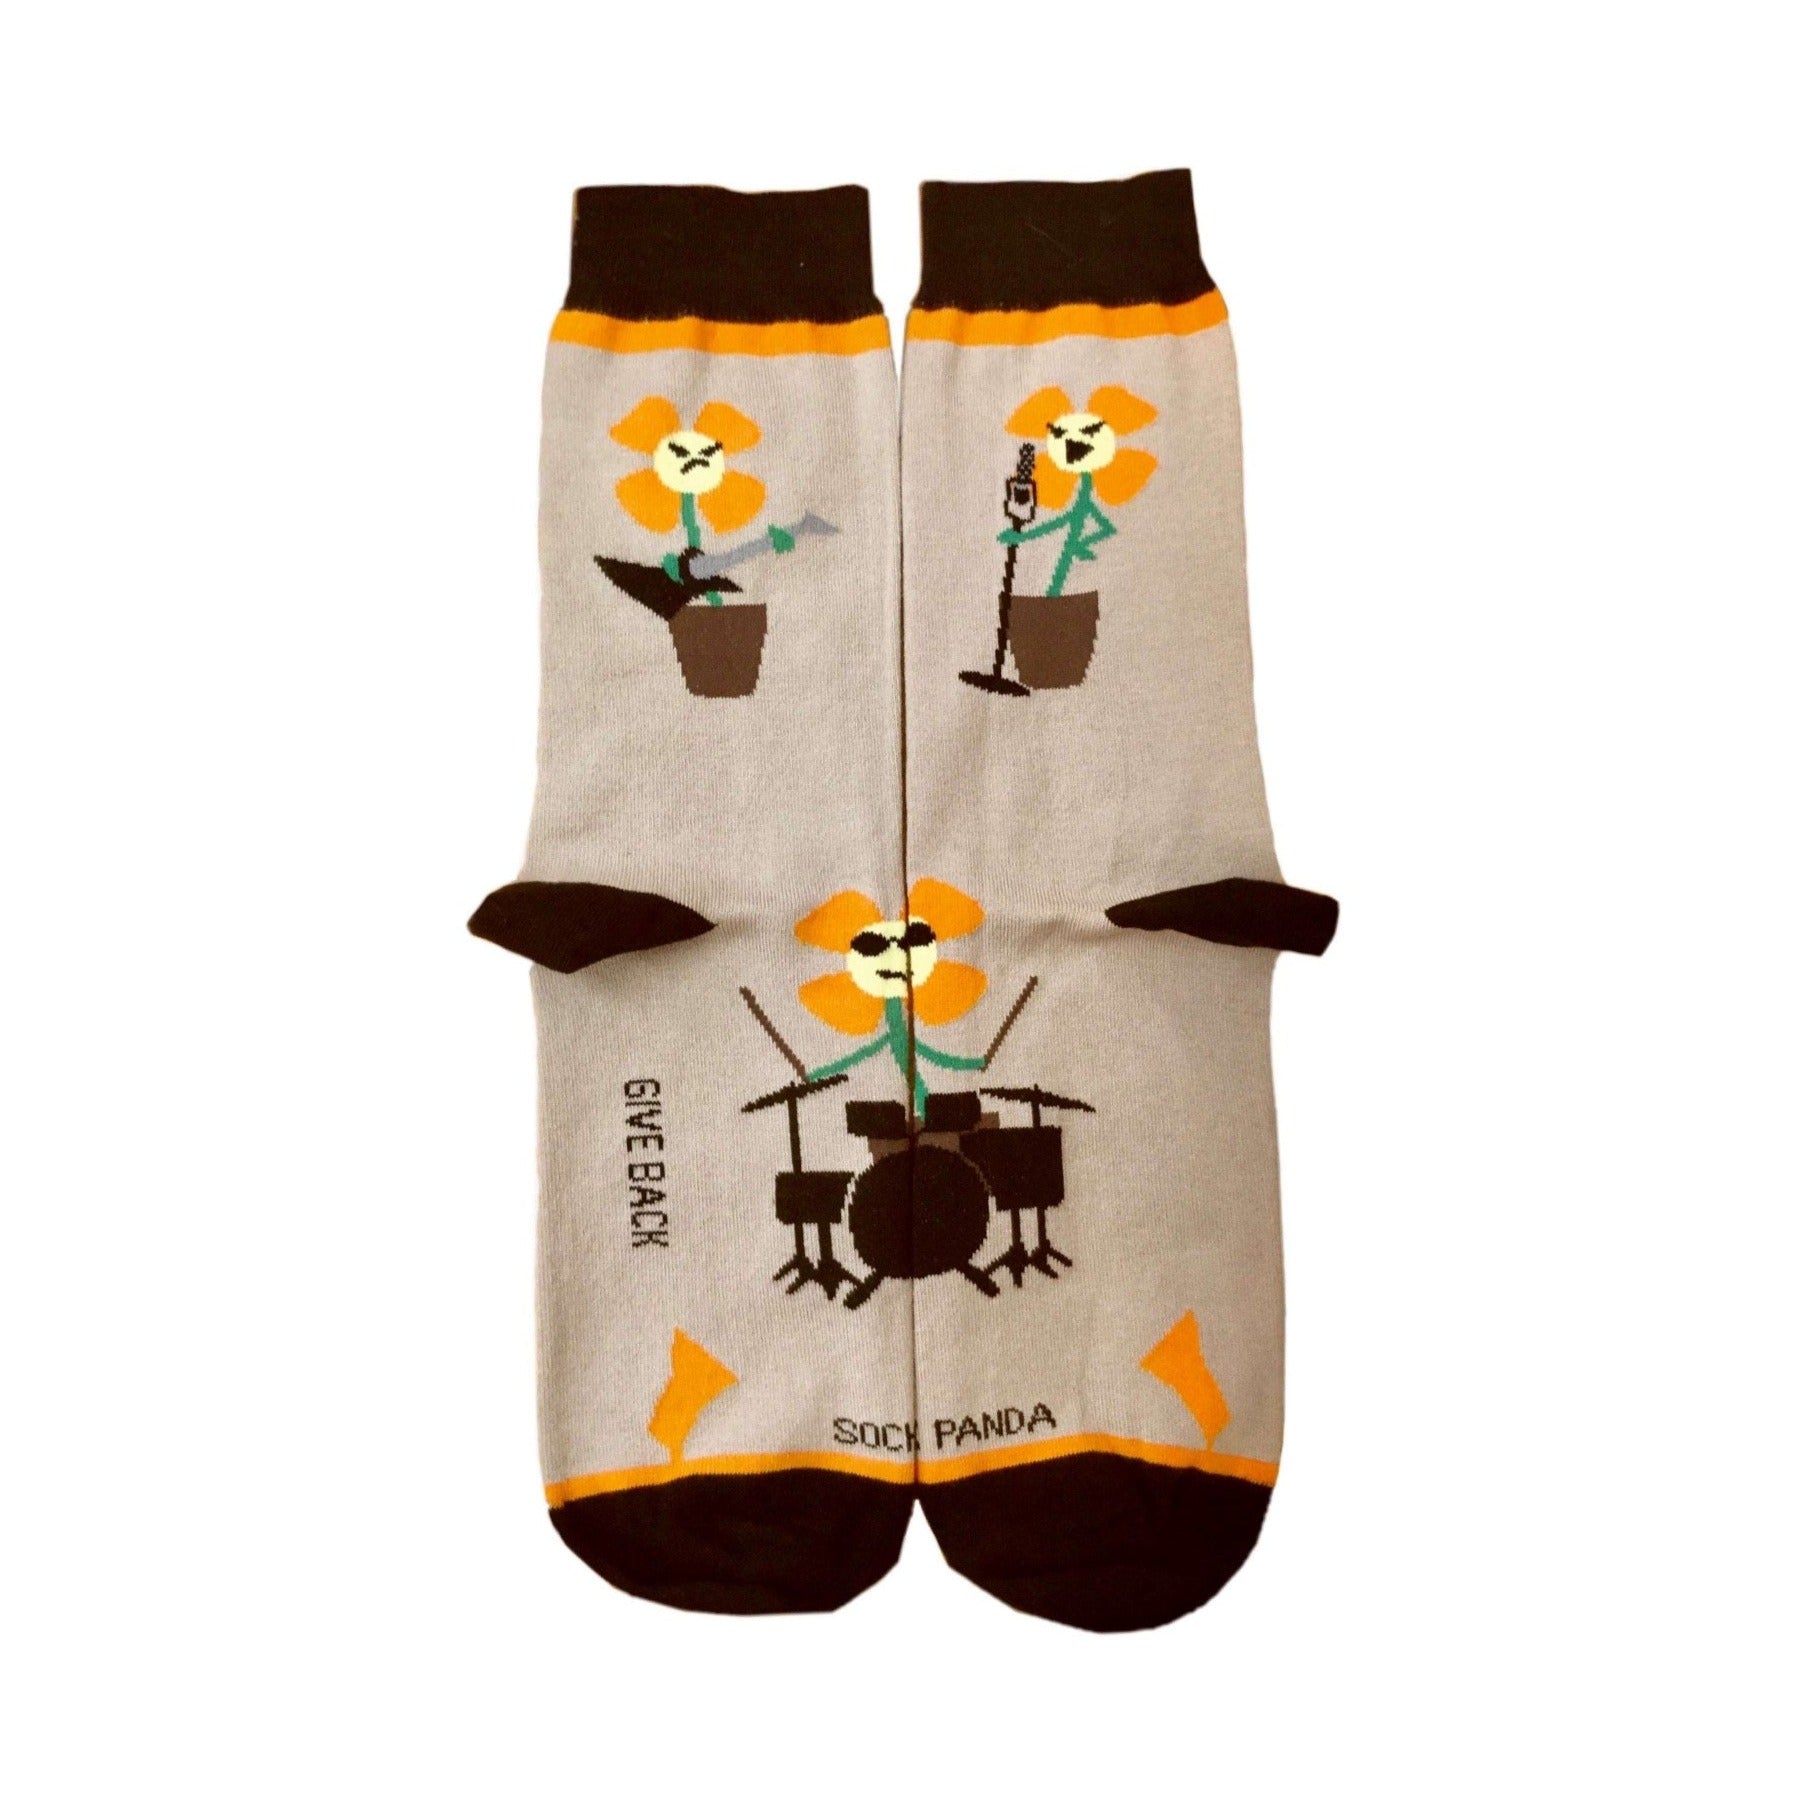 Fun Flower Rock Band Socks from the Sock Panda